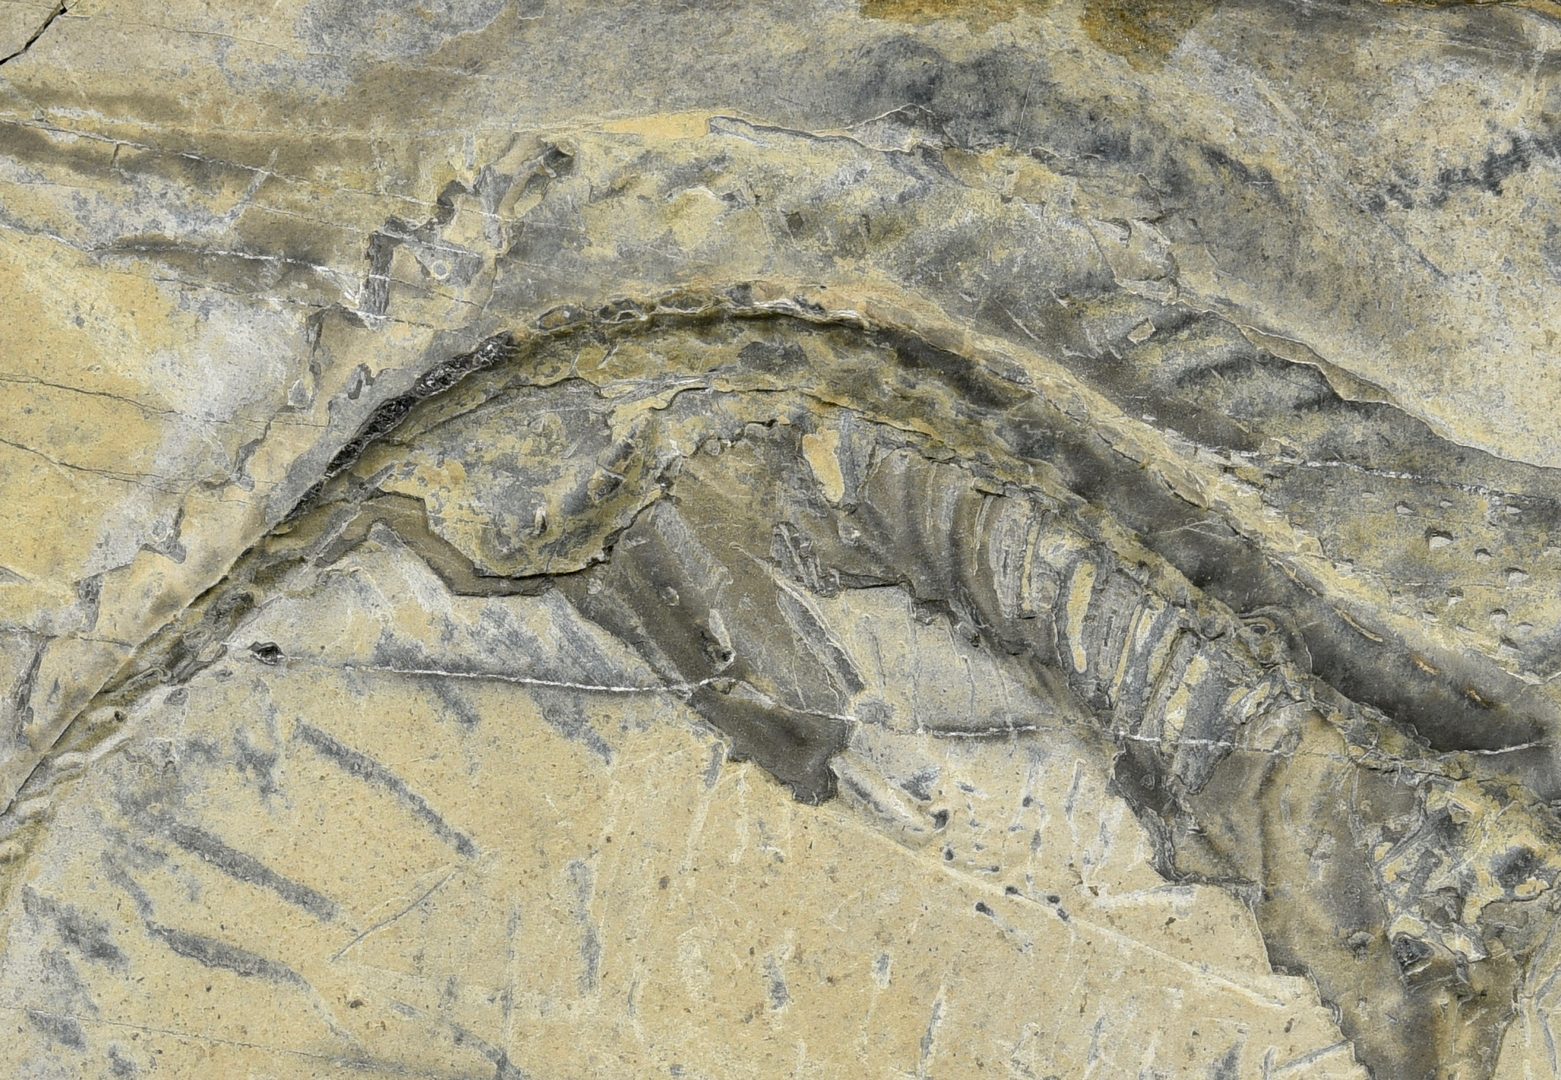 Lot 881: Therapod Dinosaur Fossil